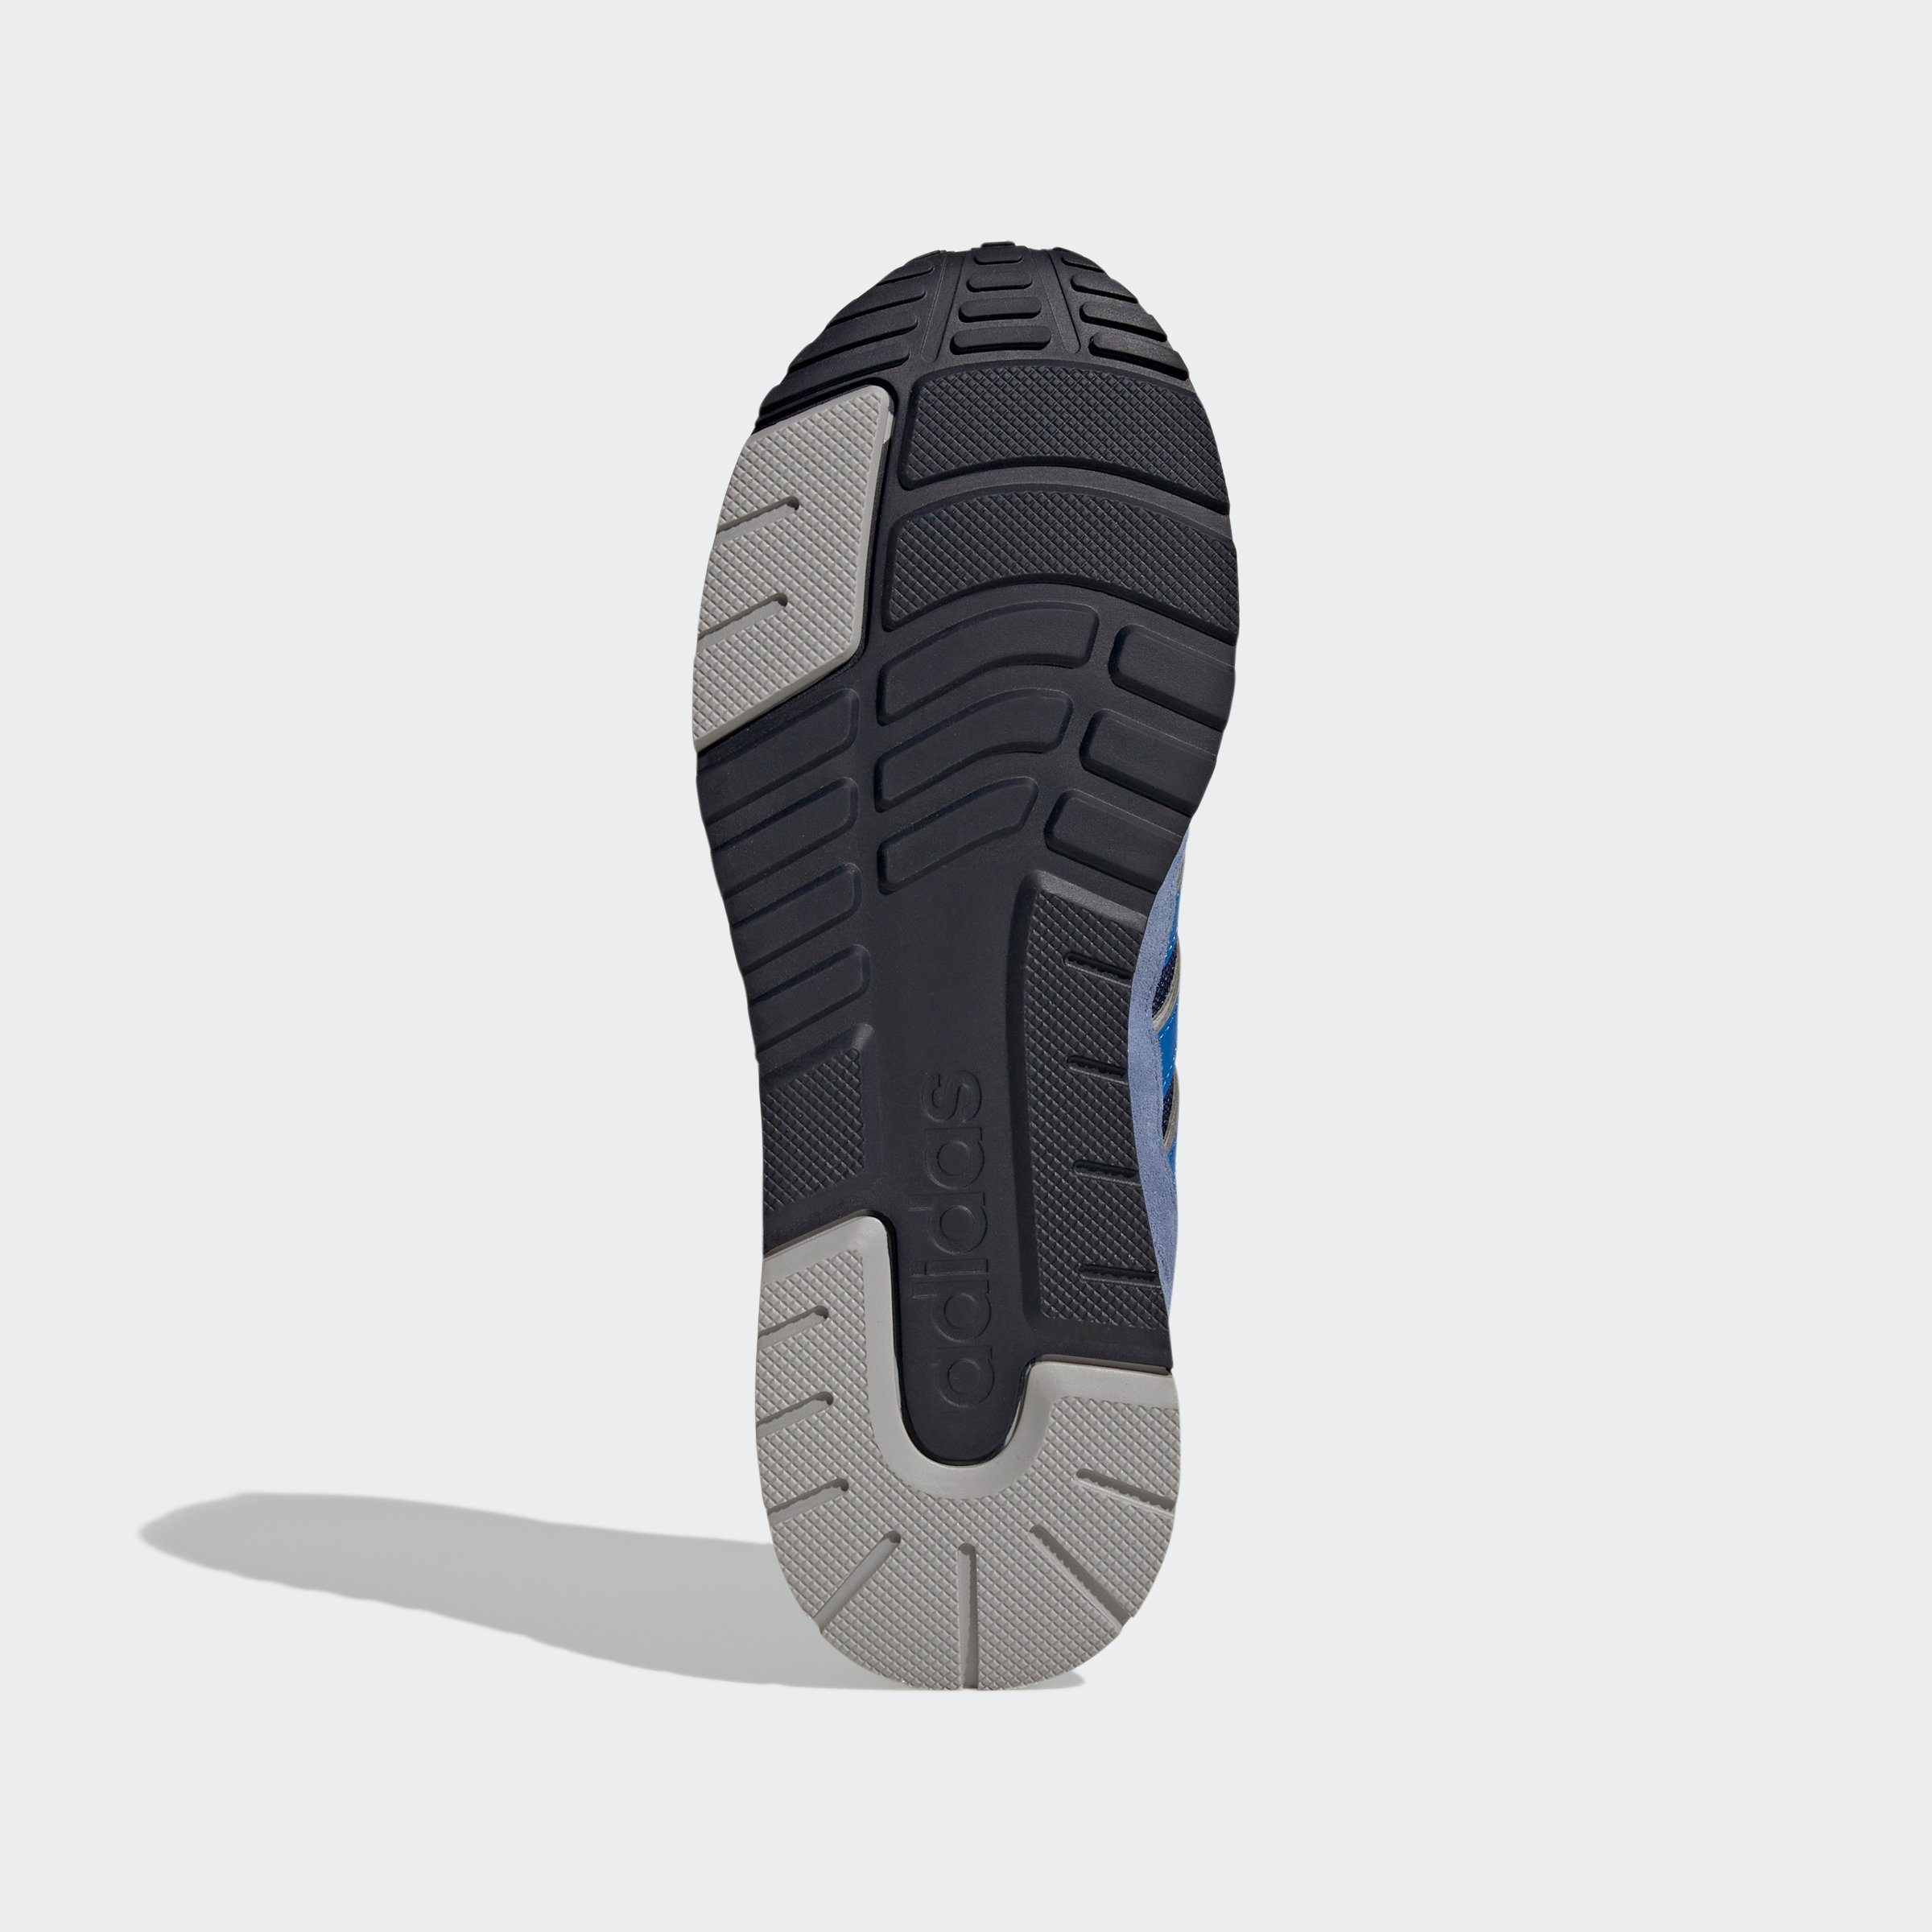 Bright Royal / Blue Sneaker RUN 80S Dark Blue Sportswear Crew adidas /